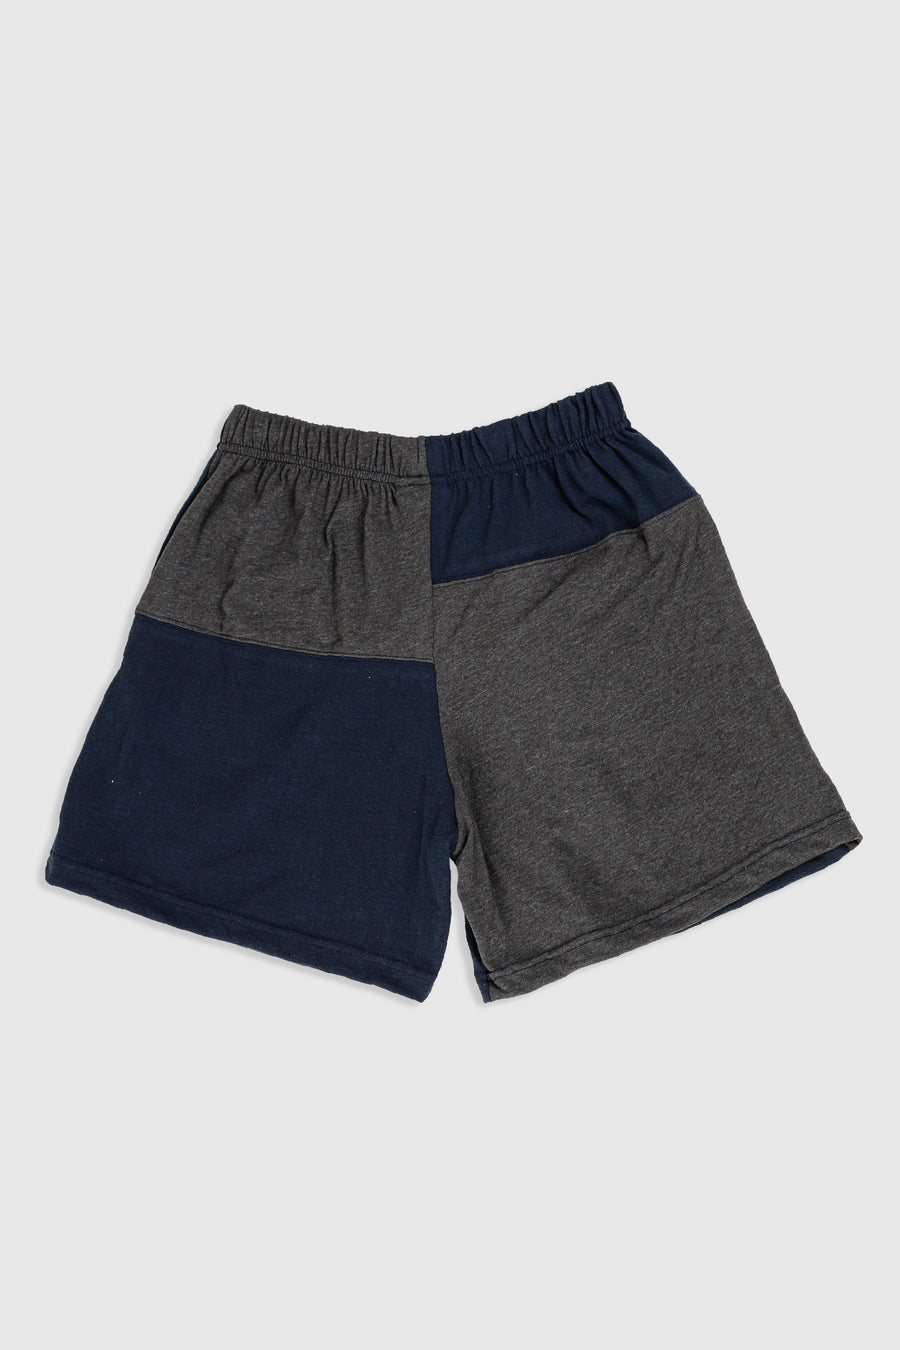 Unisex Rework Carhartt Patchwork Tee Shorts - S